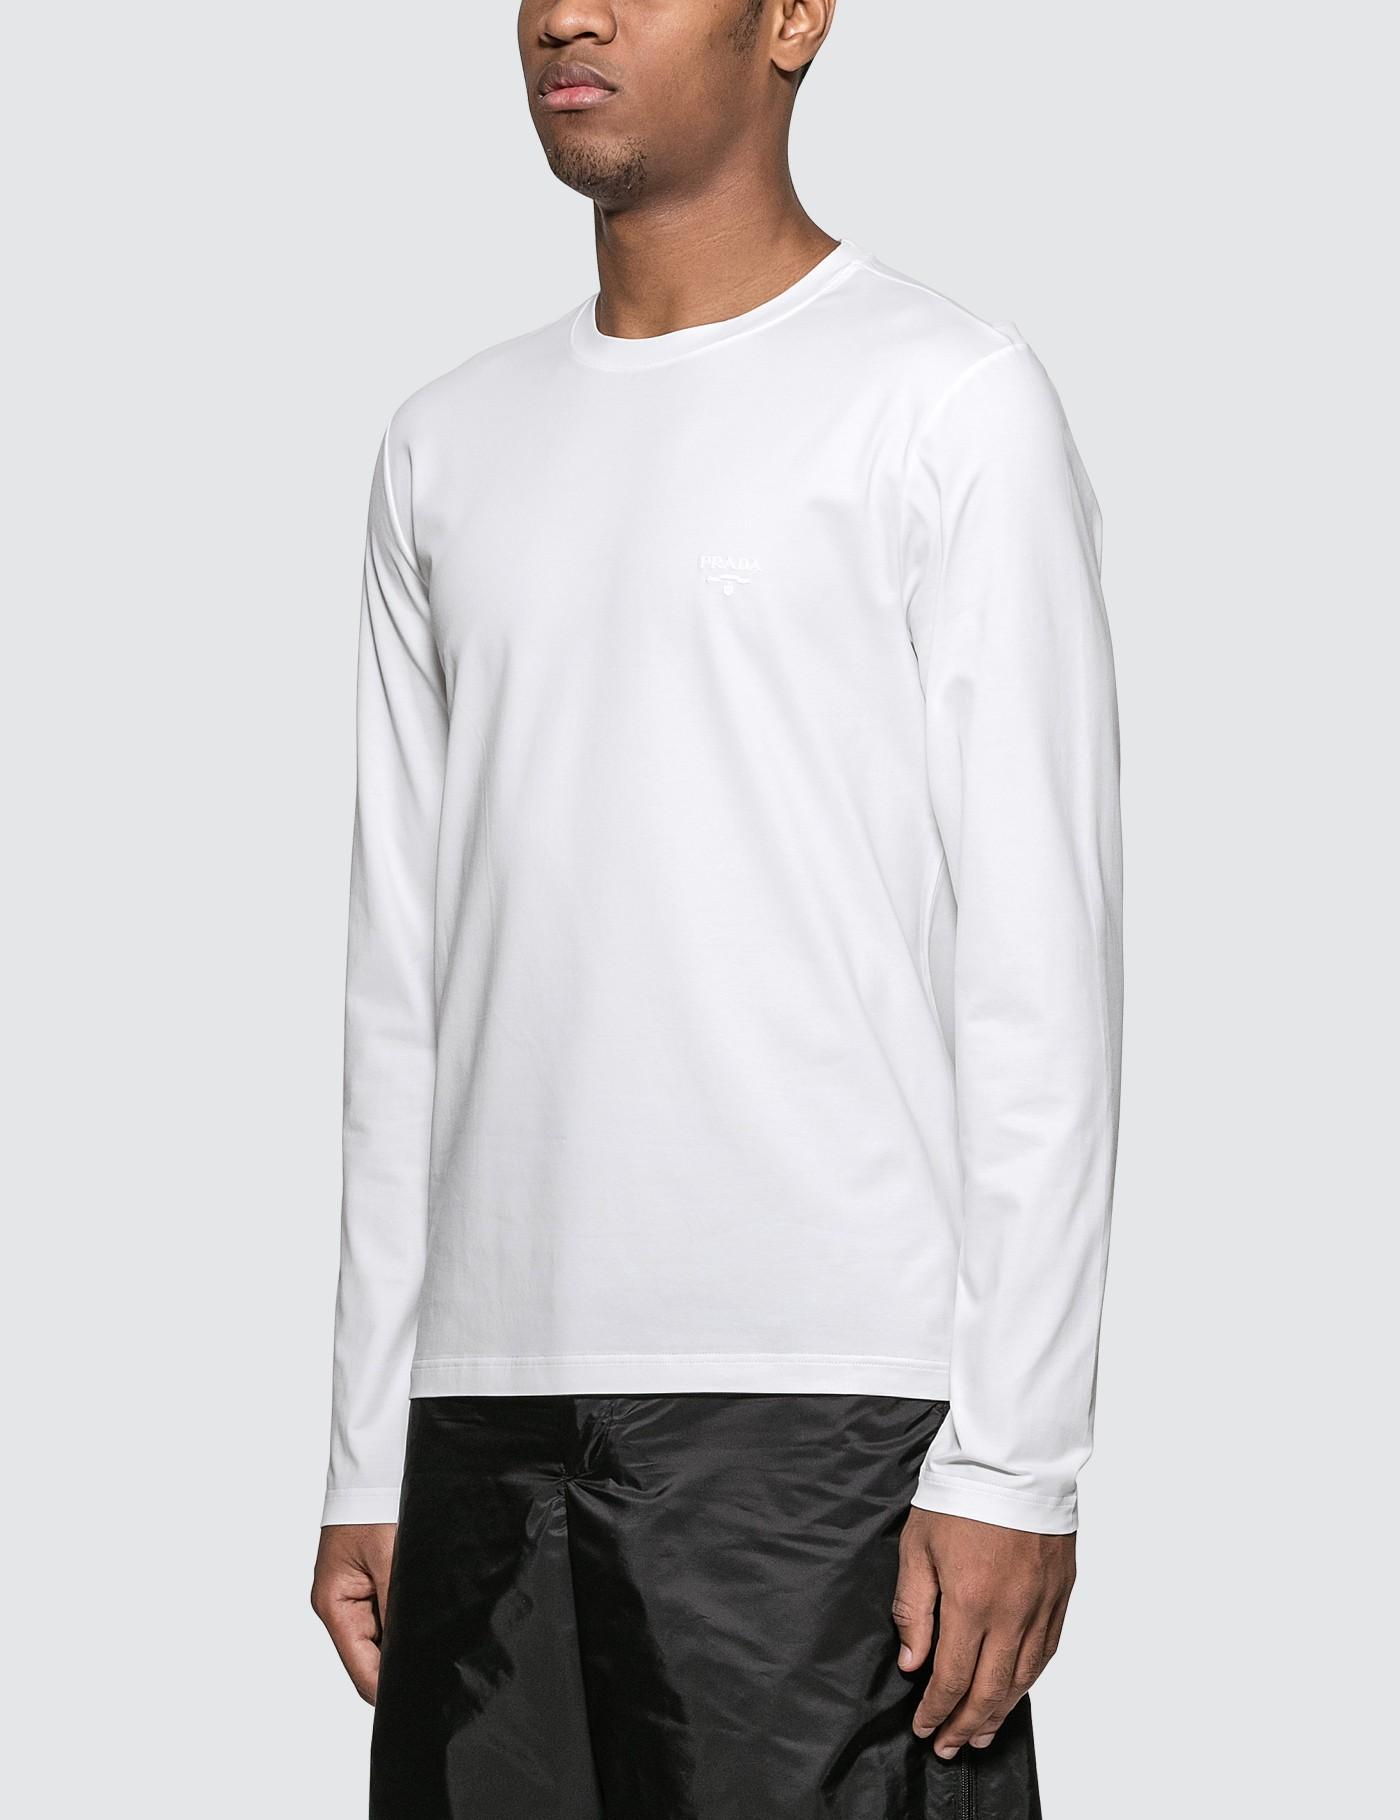 Prada Cotton Stretch Frame Logo Long Sleeve T-shirt in White for Men - Lyst